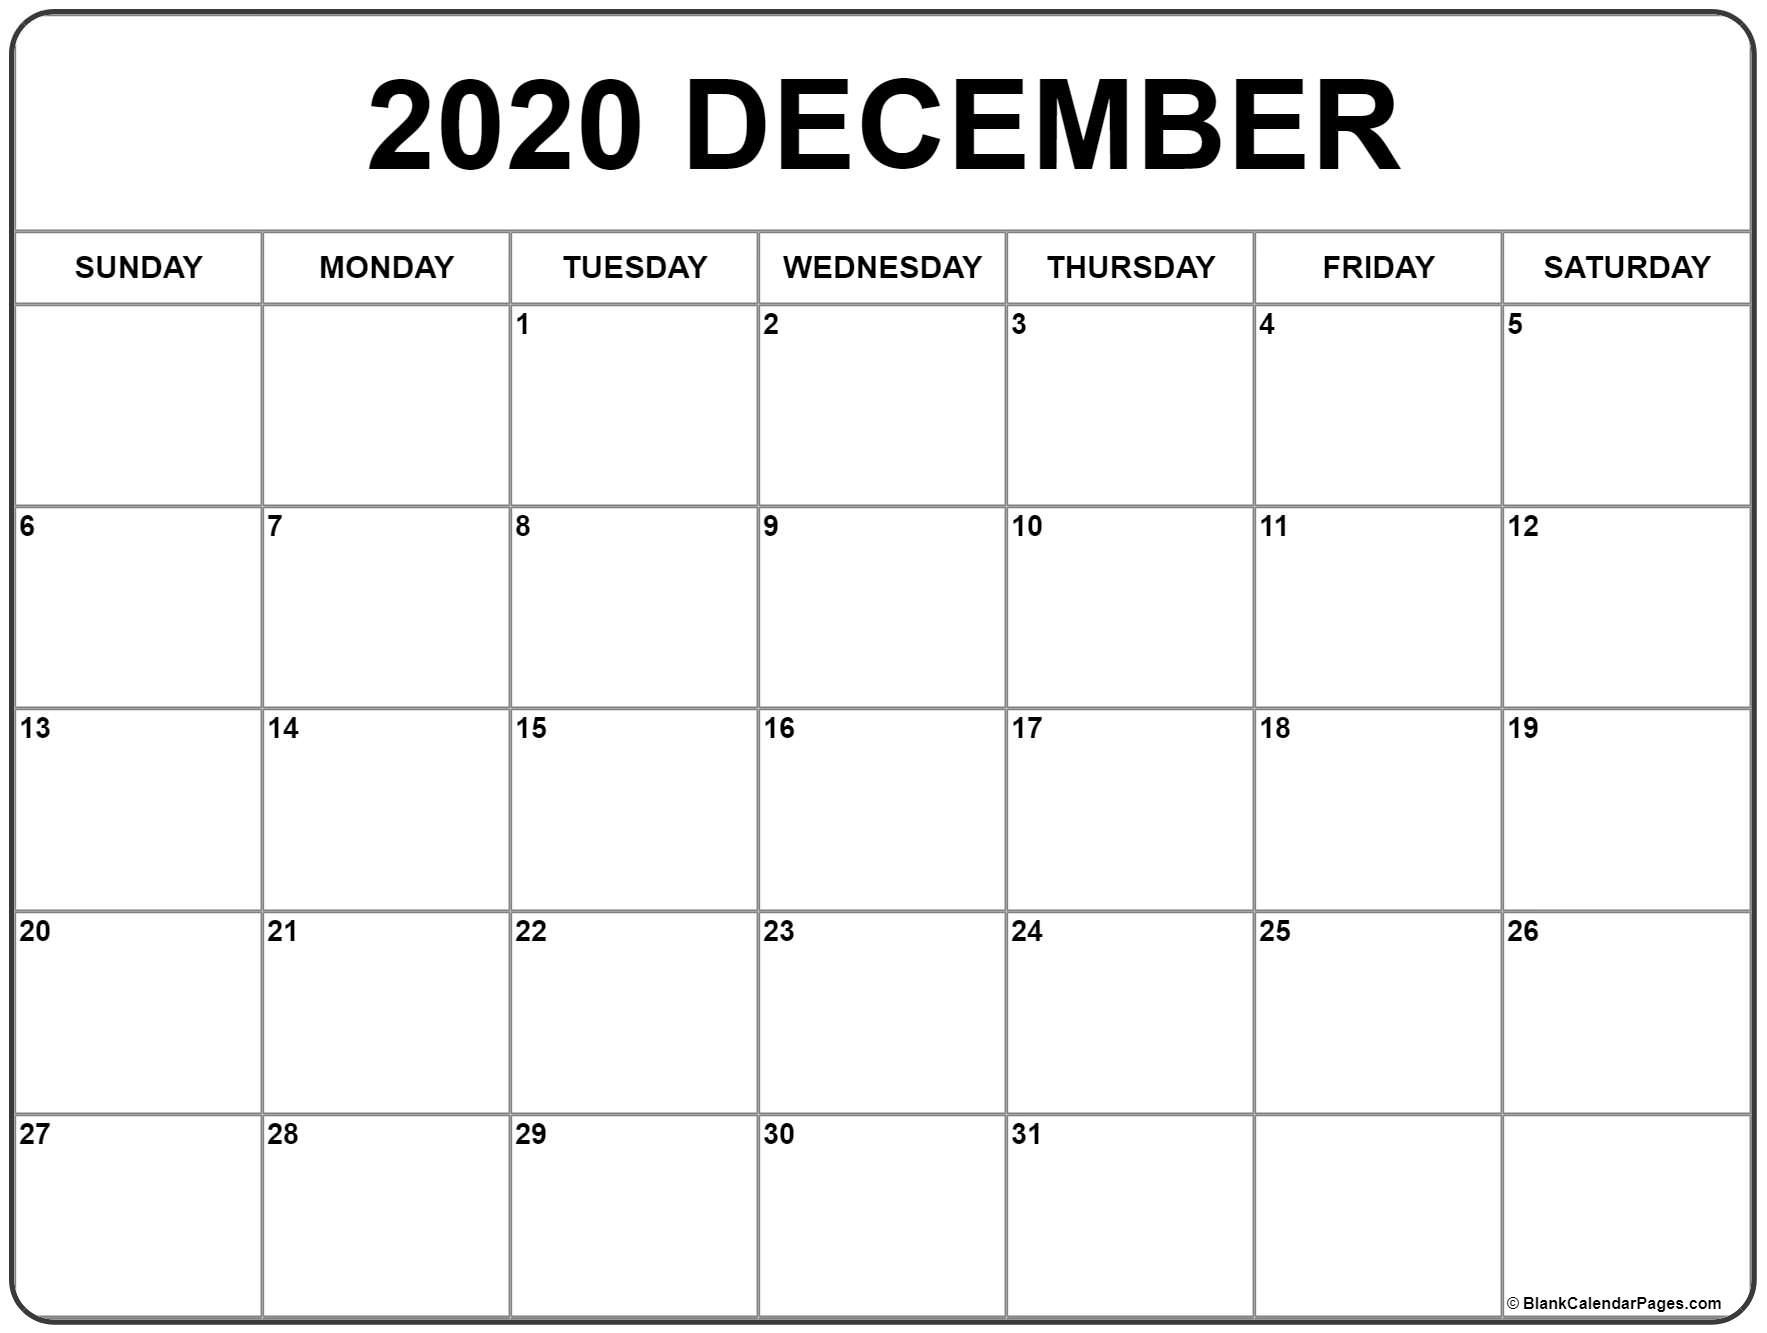 December 2020 Printable Calendar Template #2020Calendars Impressive Printable Blank Monthly Calendar Template 2020